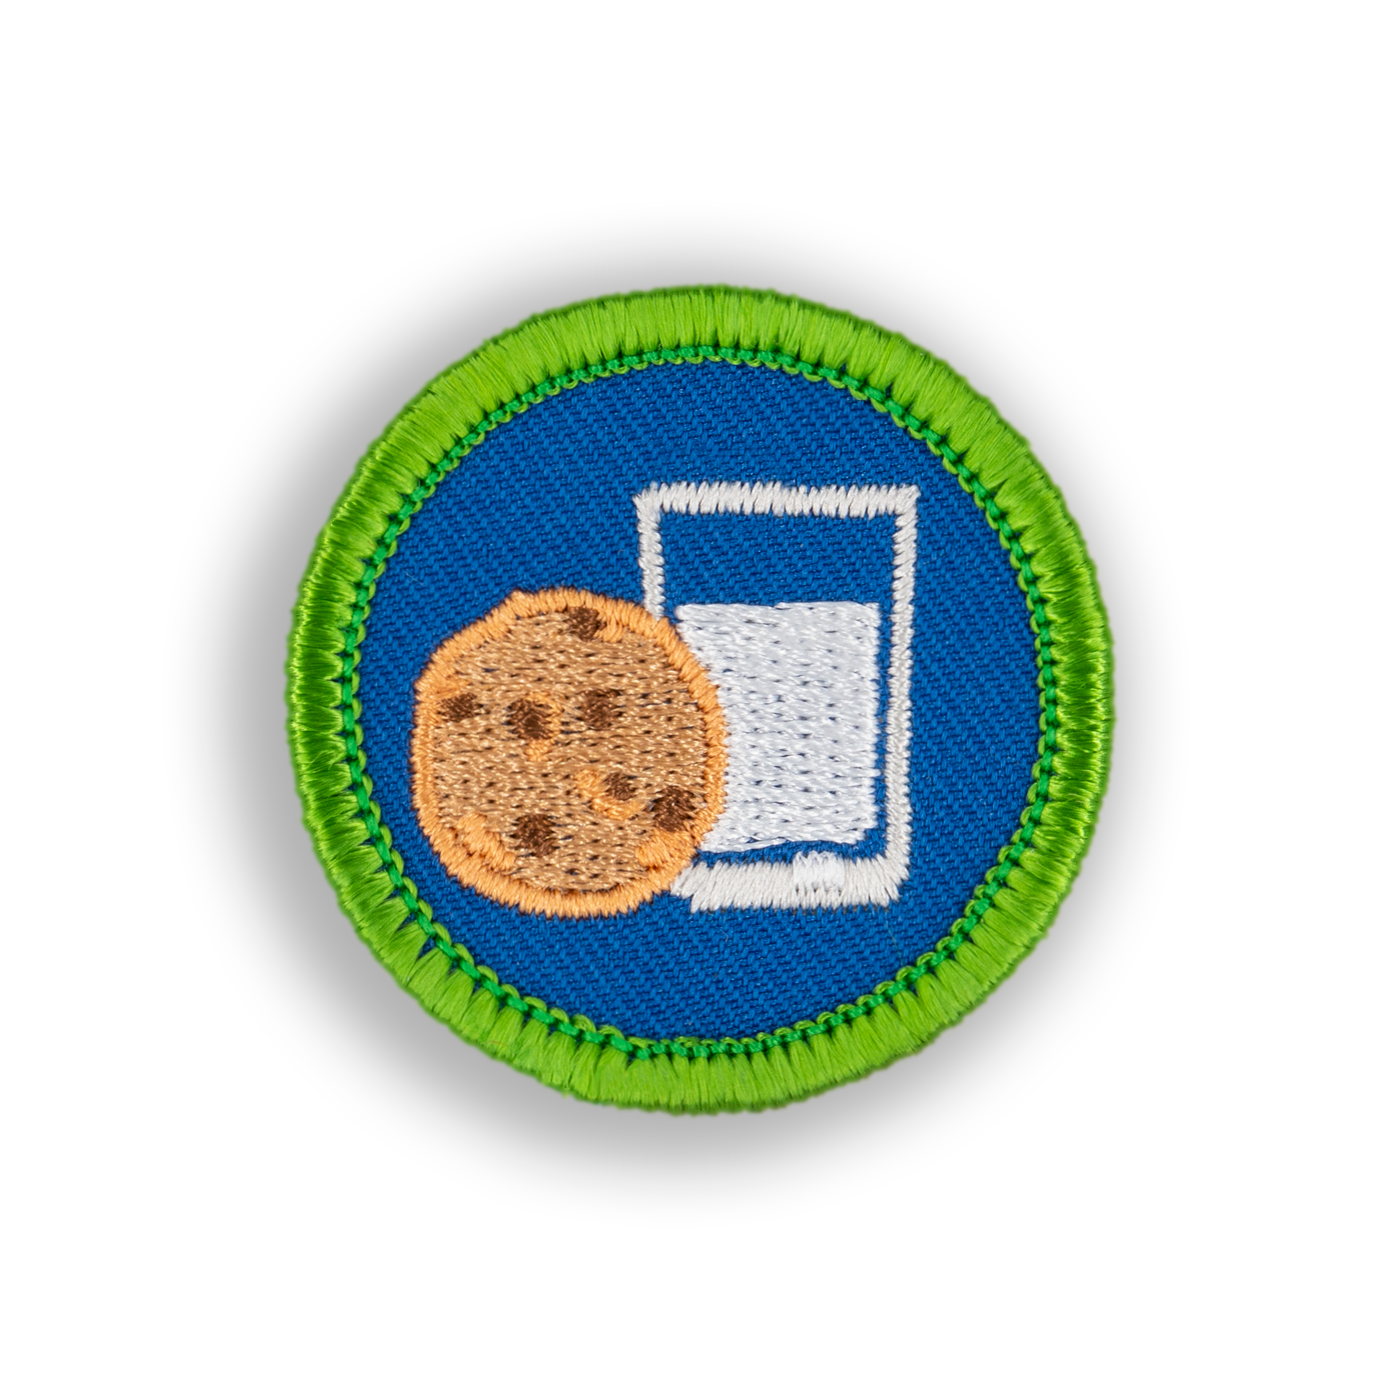 Milk & Cookies Patch | Demerit Wear - Fake Merit Badges